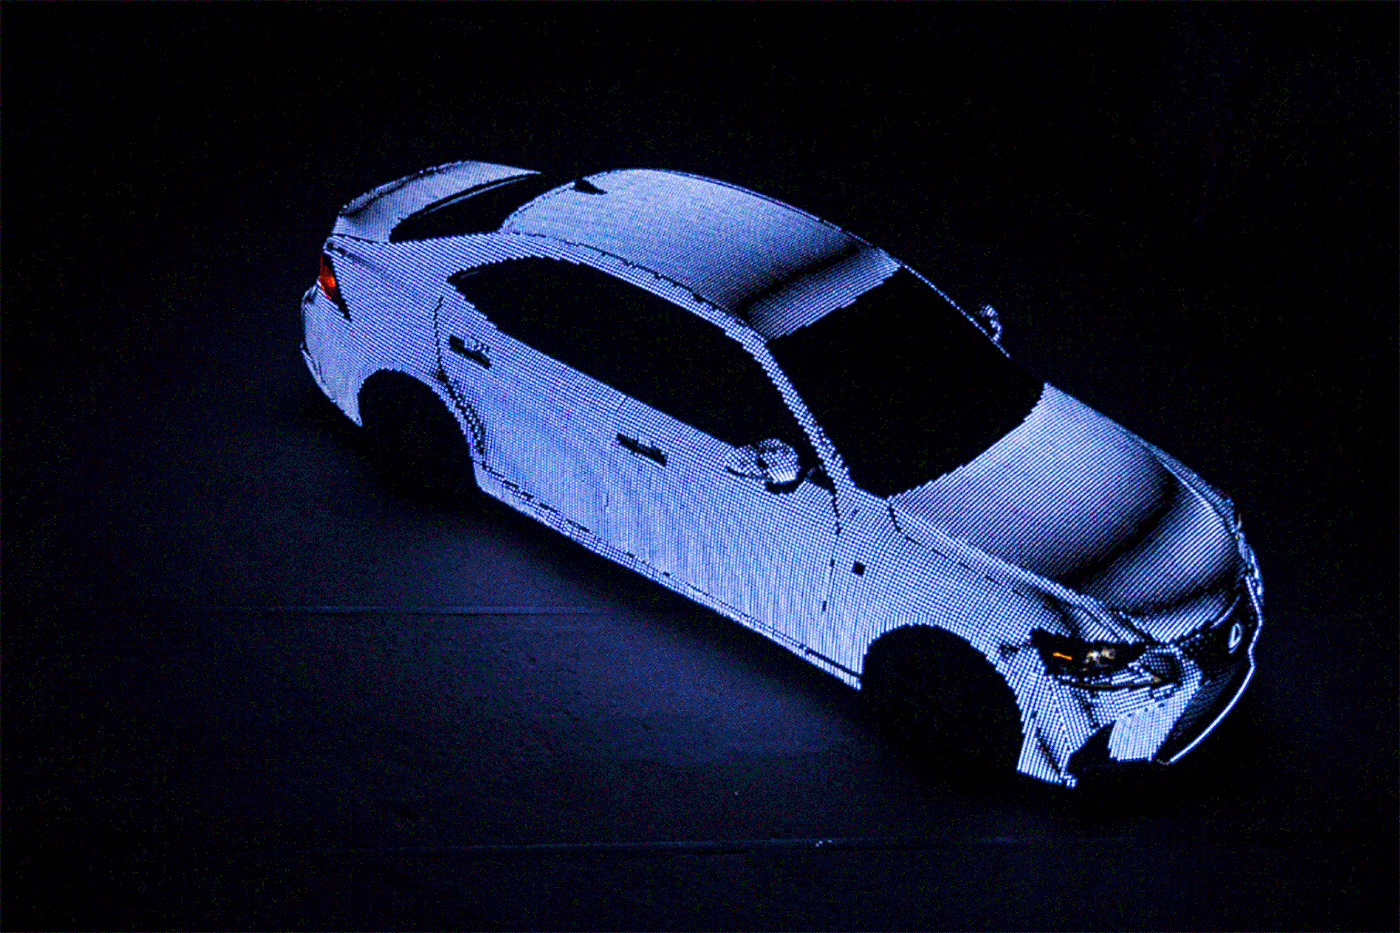 art interactive car Lexus immersive led Experiental